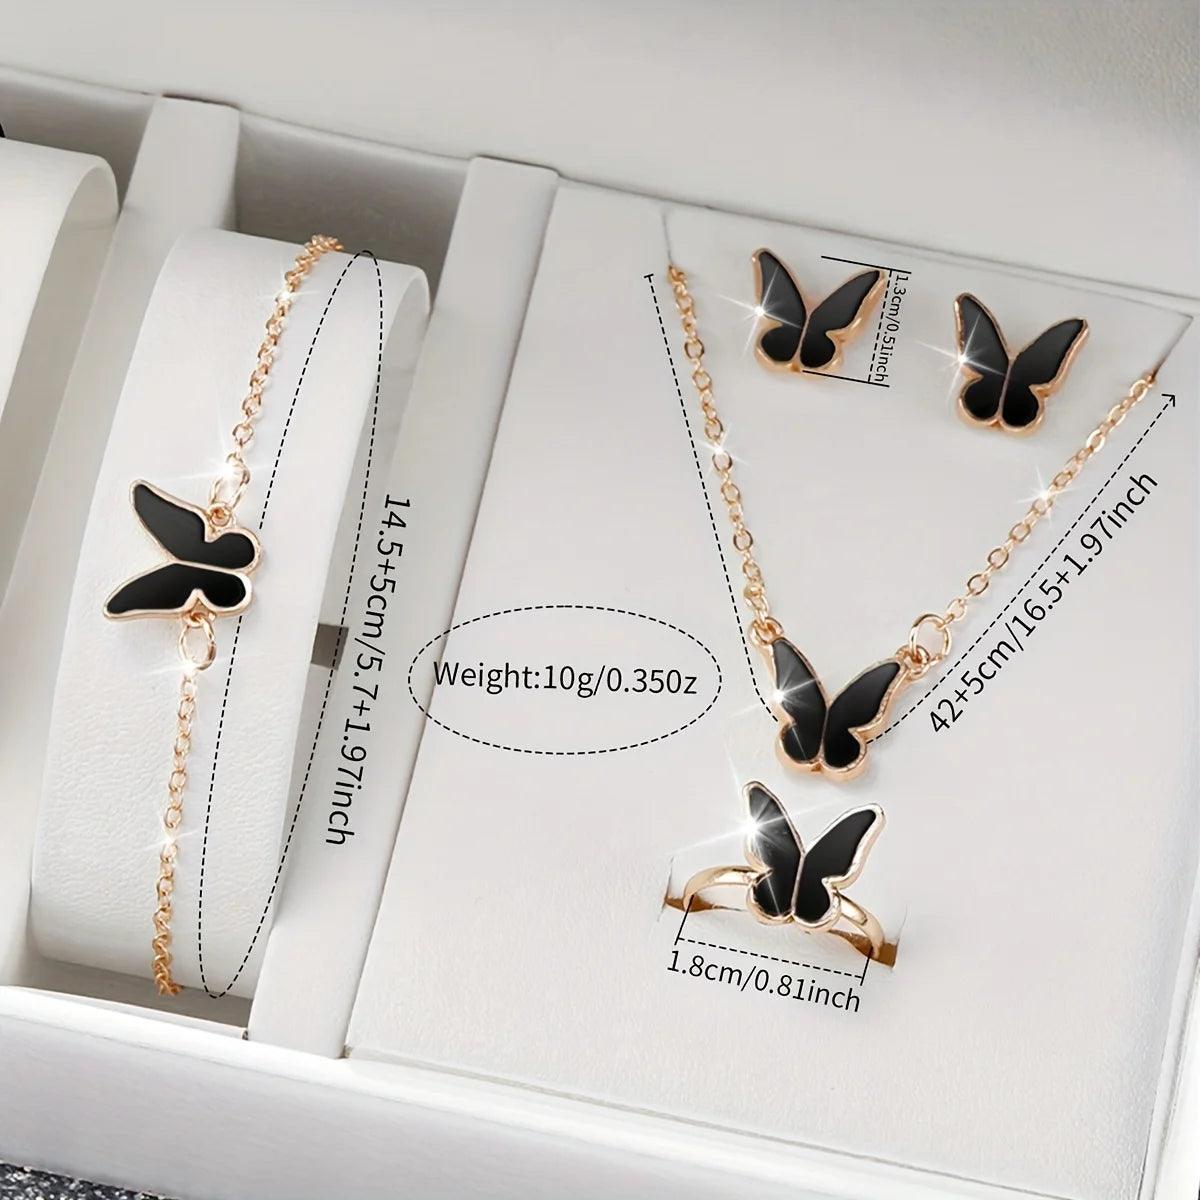 Geneva Black Watch & Jewelry Set Gift - RUBASO